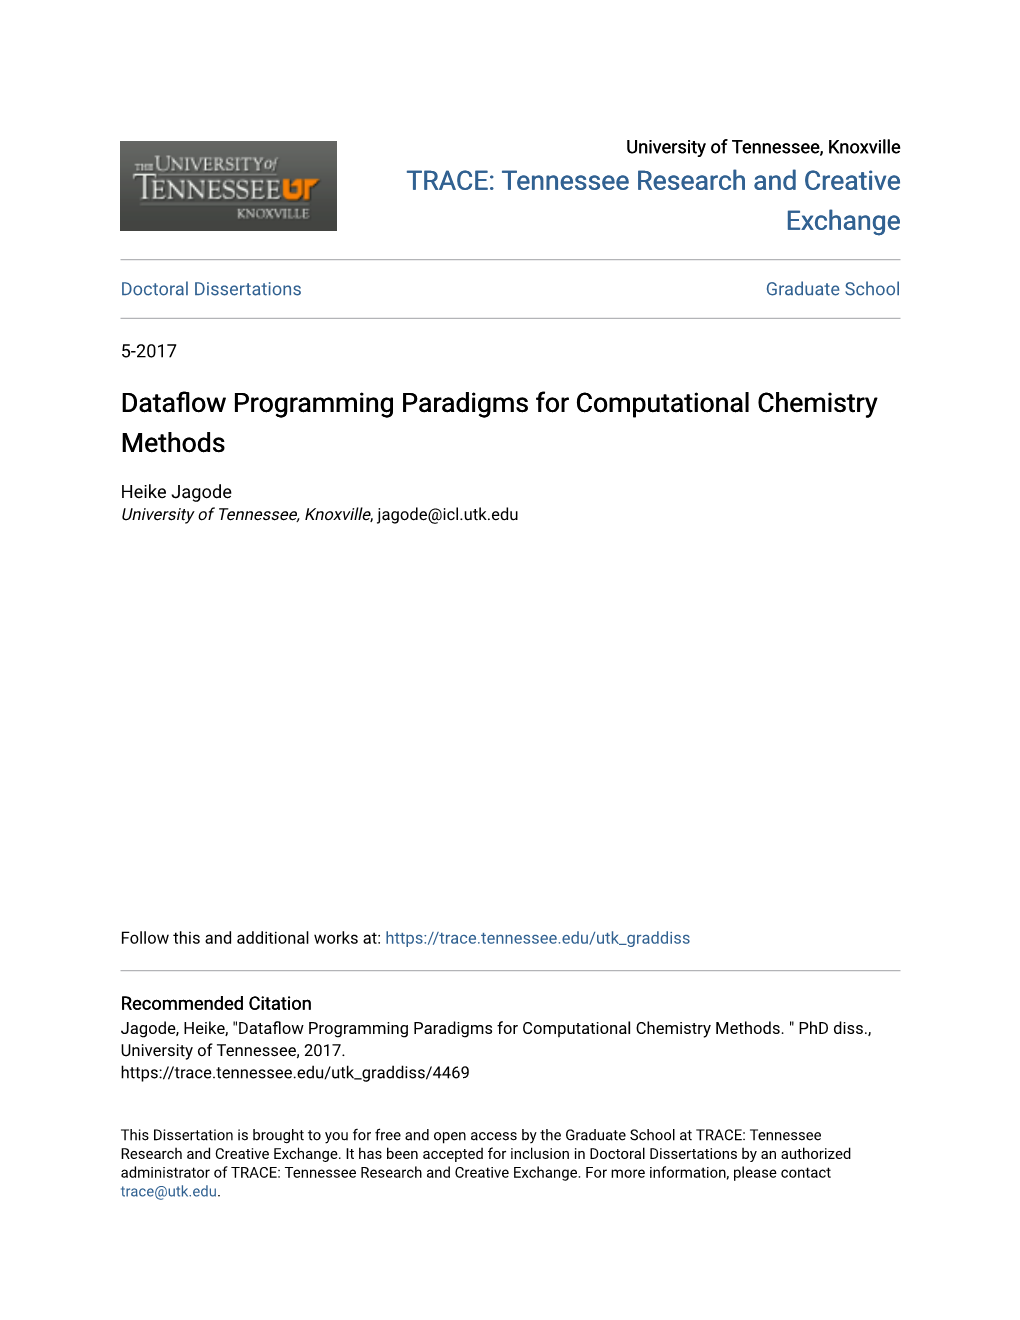 Dataflow Programming Paradigms for Computational Chemistry Methods